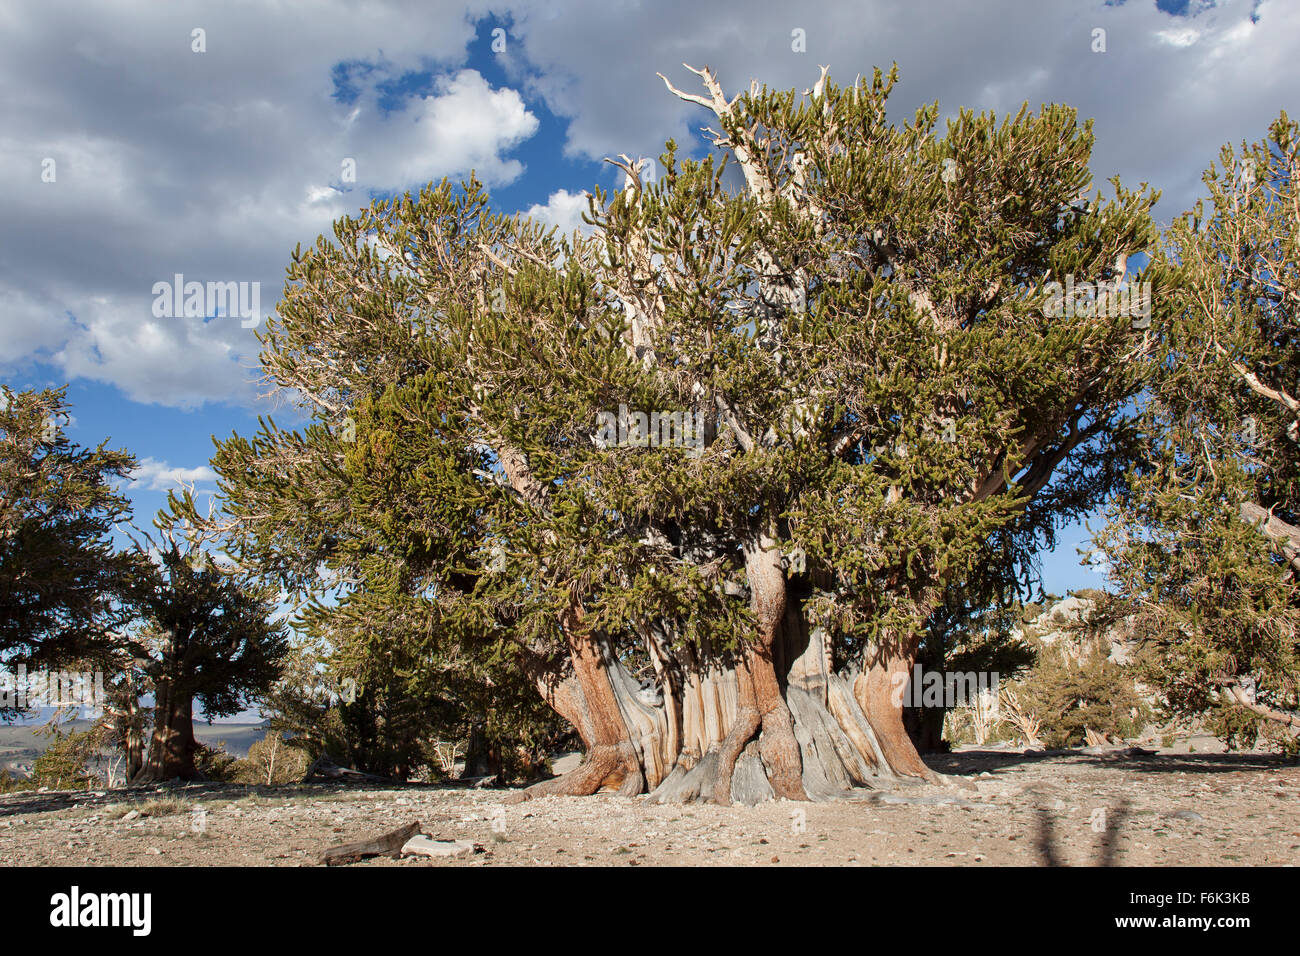 The Patriarch Tree, the largest bristlecone pine tree in the world. Ancient Bristlecone Pine Forest, California, USA. Stock Photo